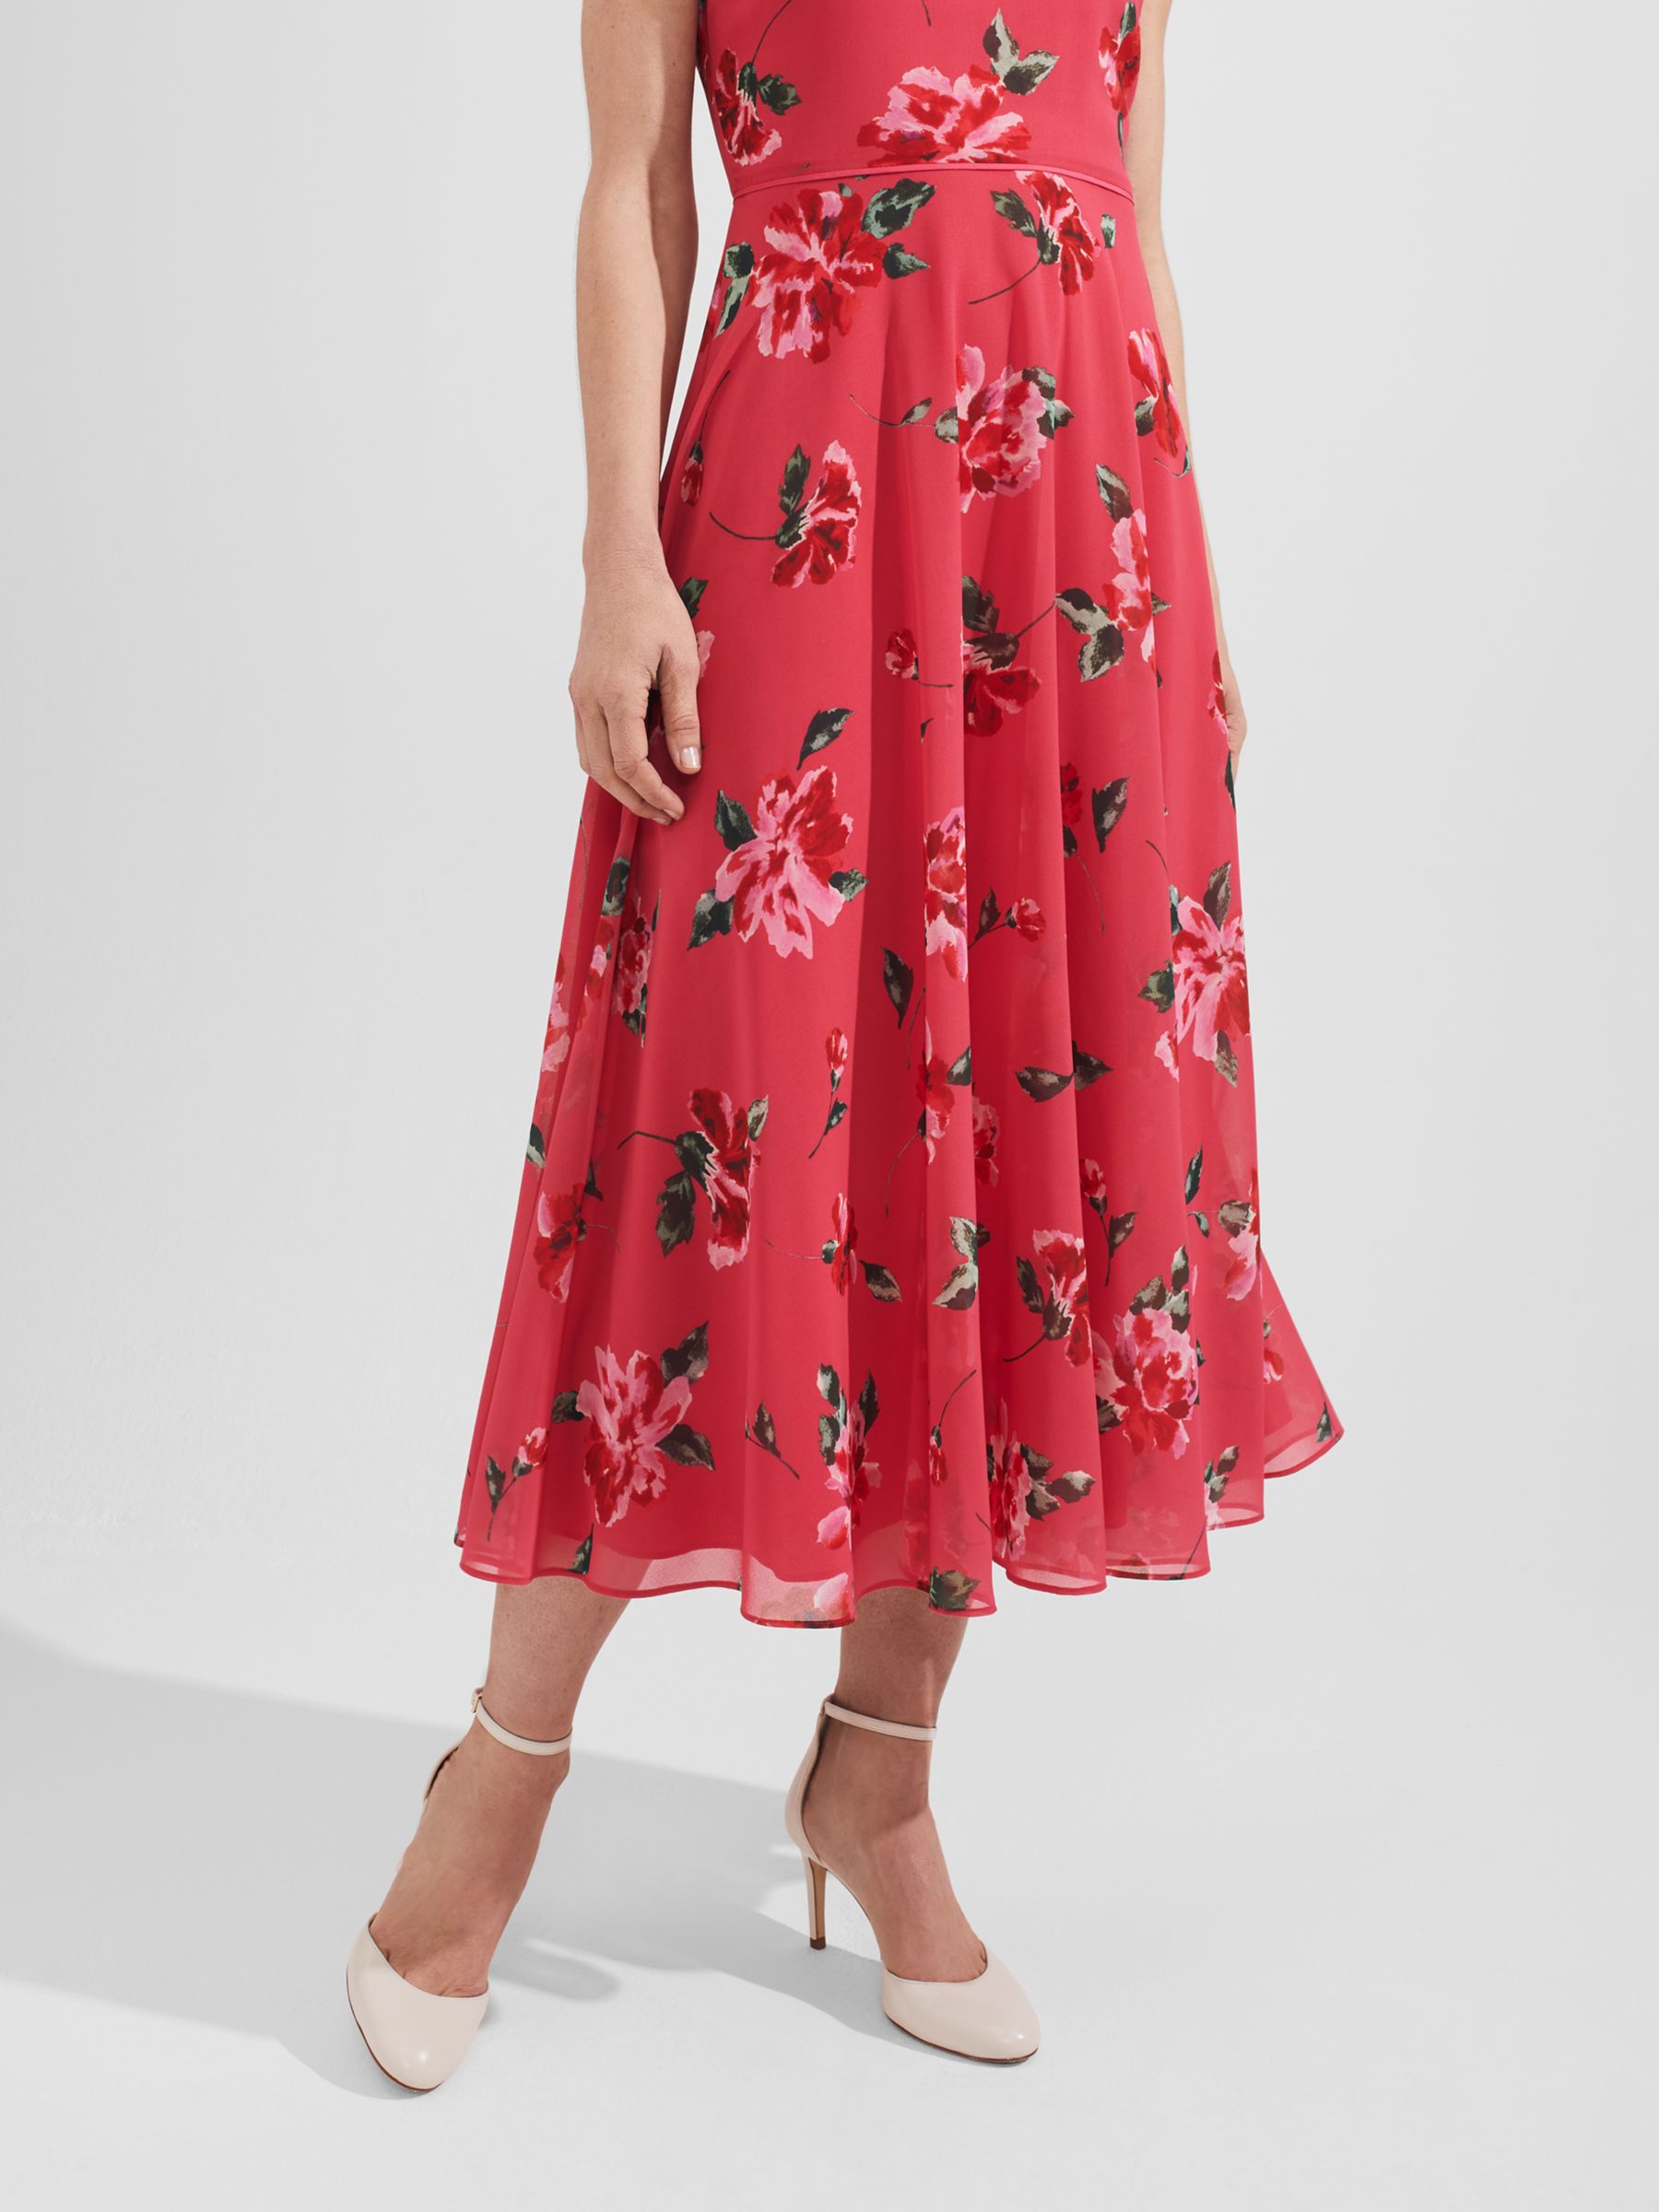 Hobbs Carly Floral Print Midi Dress, Red/Multi, 6